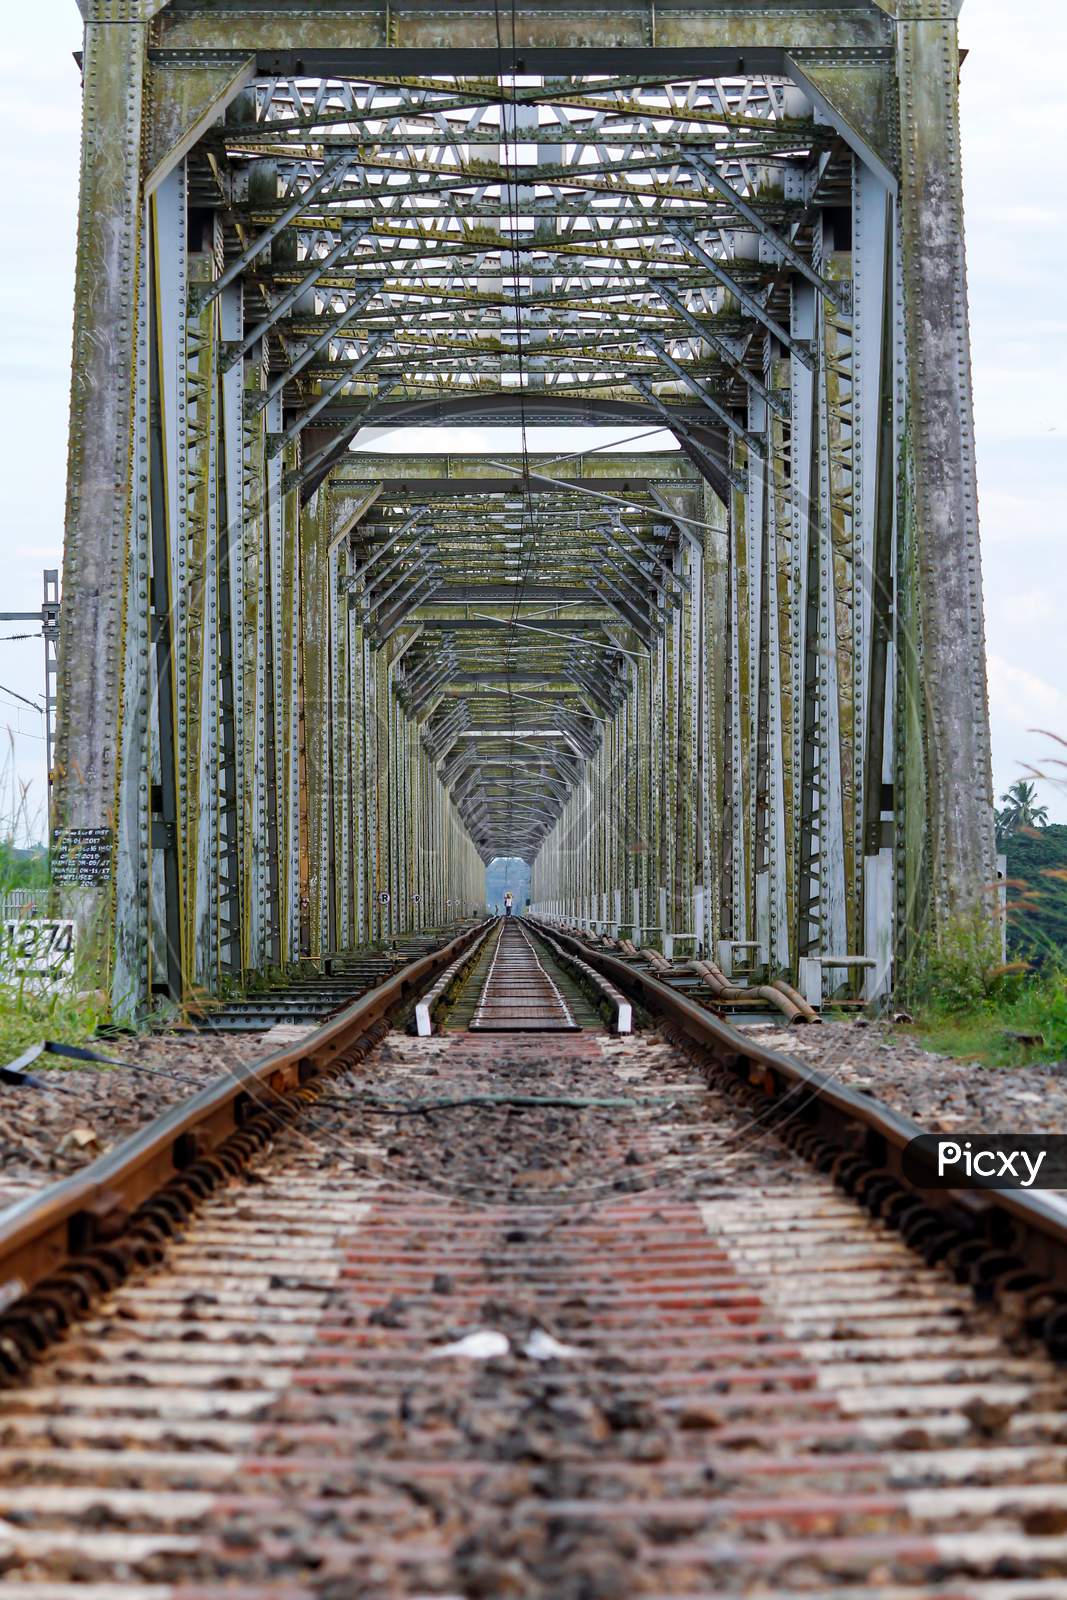 netravathi railway bridge mangalore karnataka